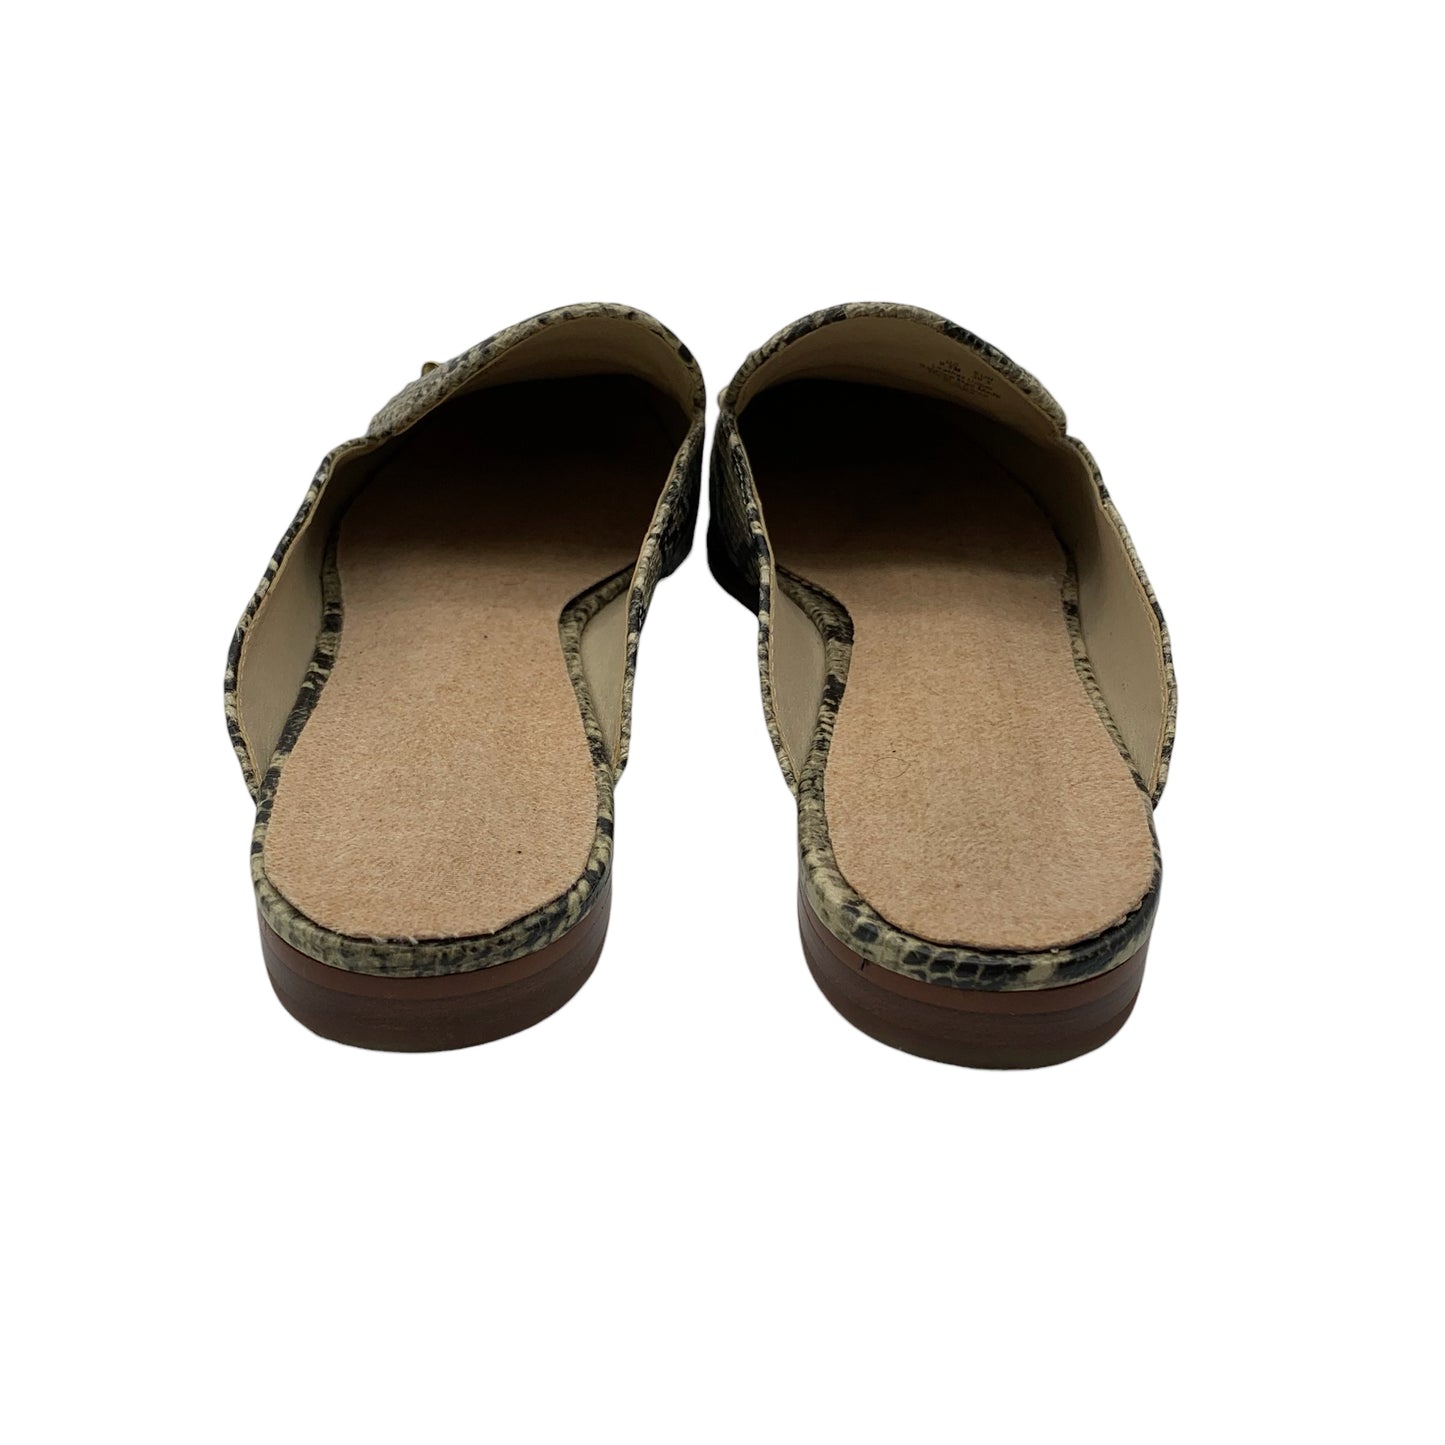 Shoes Flats Mule & Slide By Sam Edelman  Size: 9.5